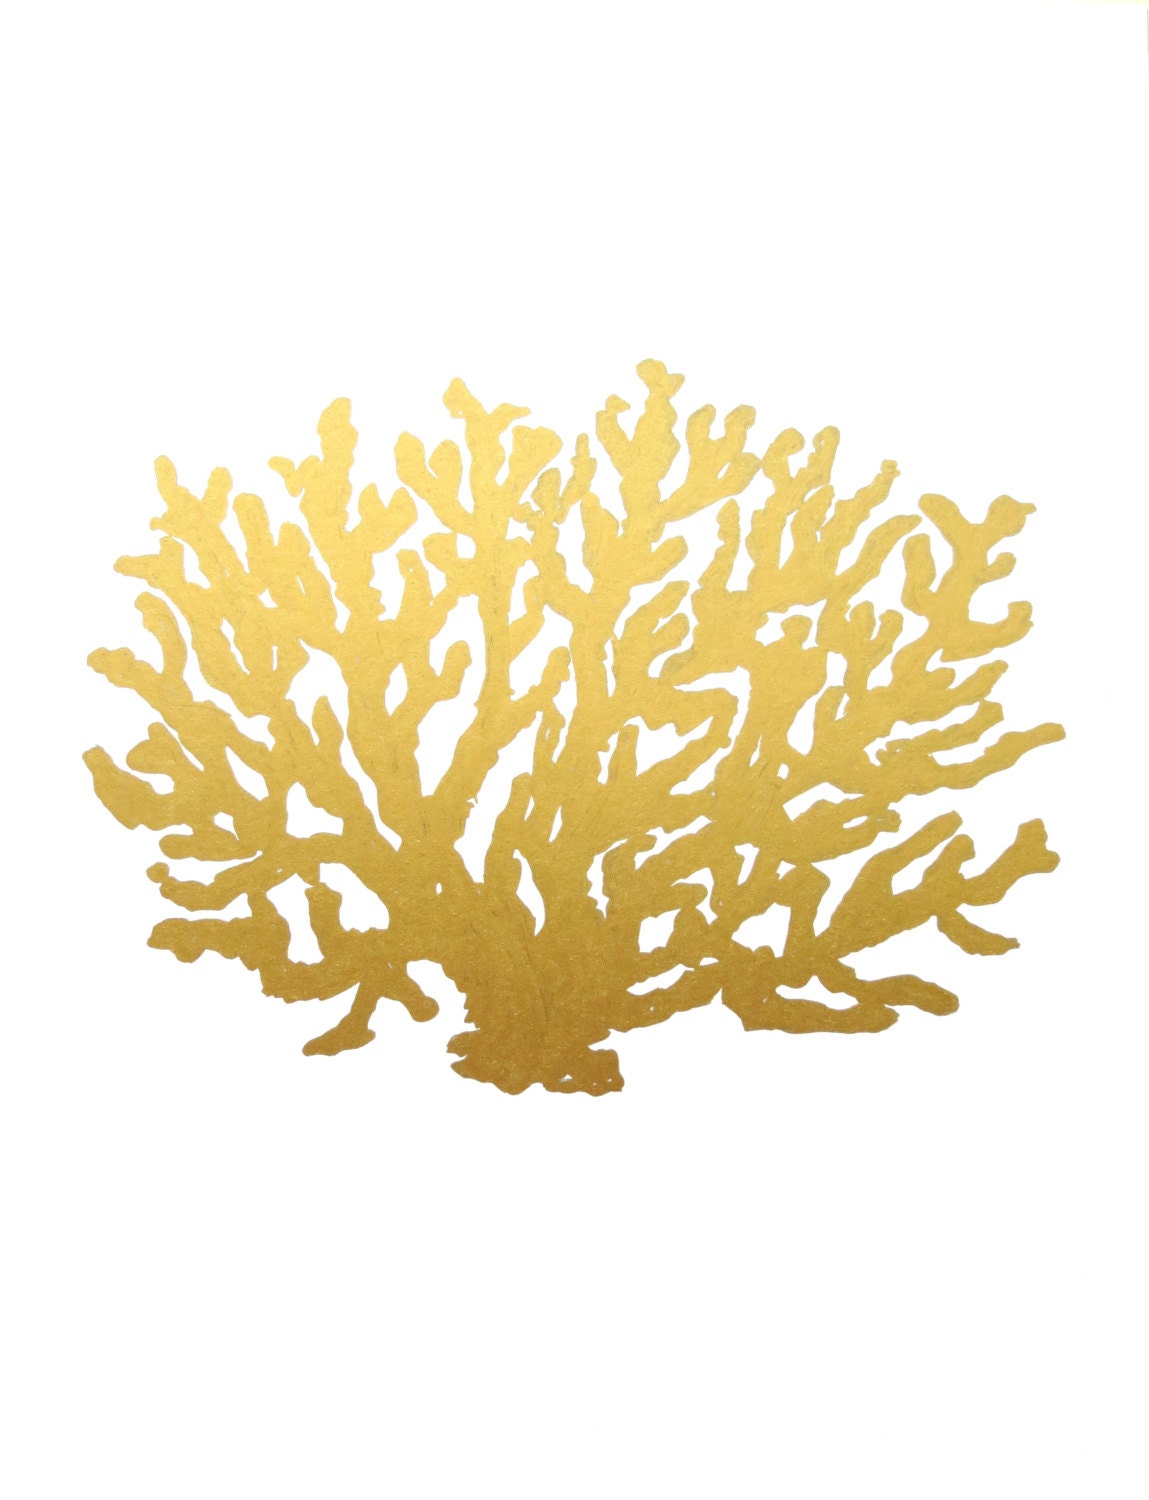 Art Print 24K Gold Original Coral Painting on Paper 8.5x11 by Jennifer Latimer - GildedMint